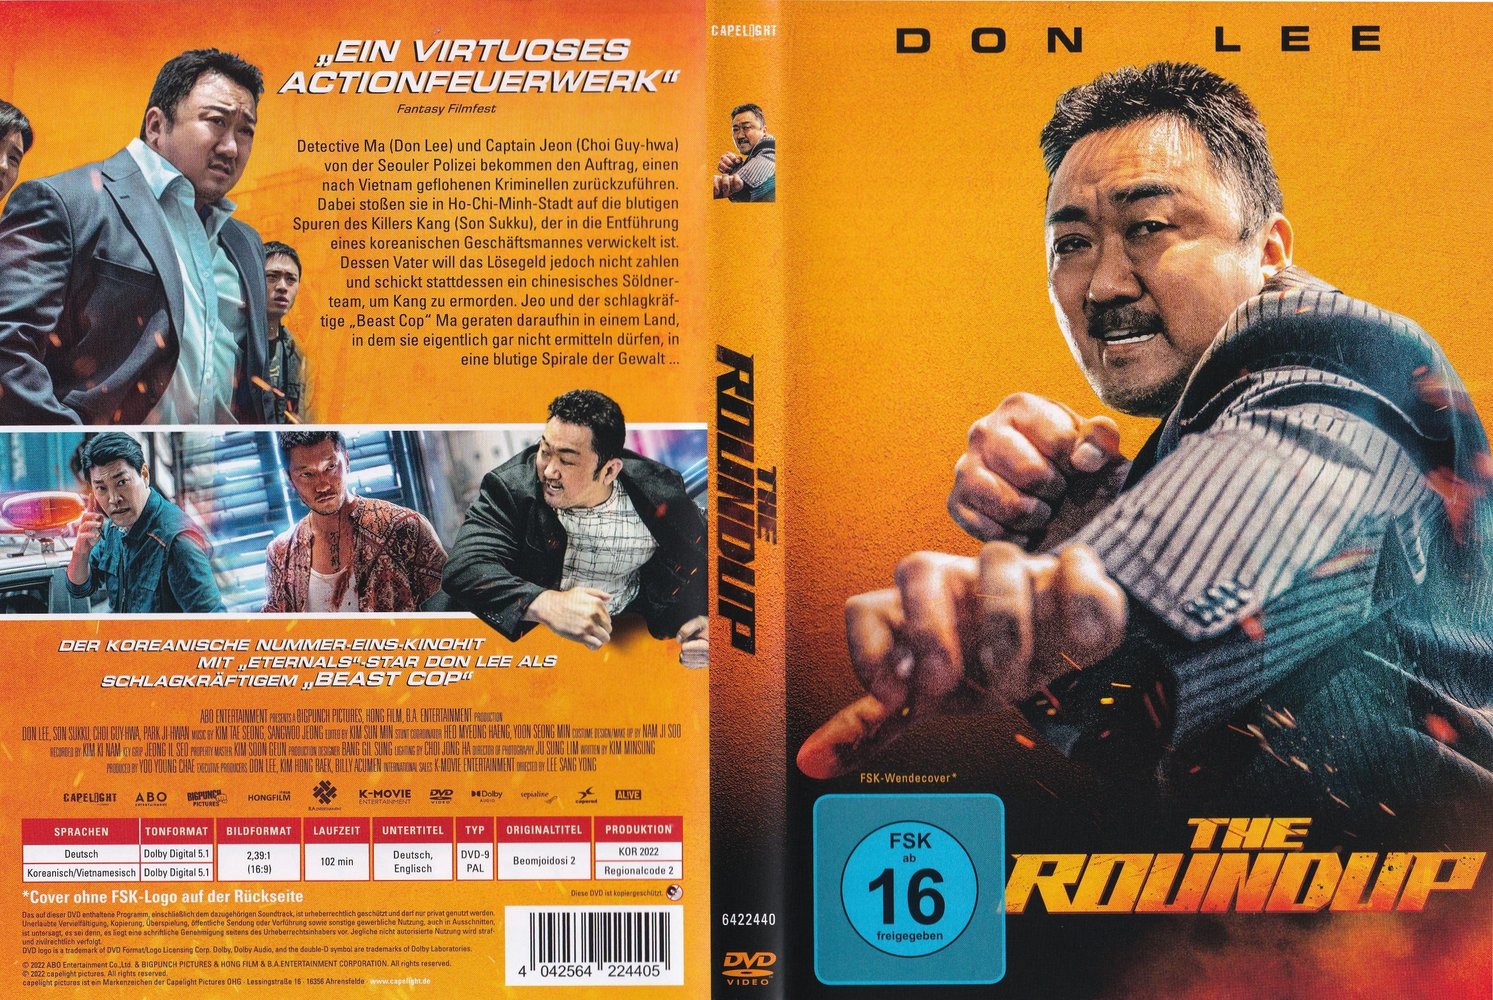 https://gfx.videobuster.de/archive/v/cc_WMSEbigbxEo7p8viQIuwcz0lMkawsiUyRqglMkZpbWGZJTJGanBlZyUyRmPOYmSsZmRhYmI0YcgzYTVjYenYZWVlYzA2Yy5qcGcmcj1opjAw/the-outlaws-2-the-roundup-dvd-full-cover.jpg